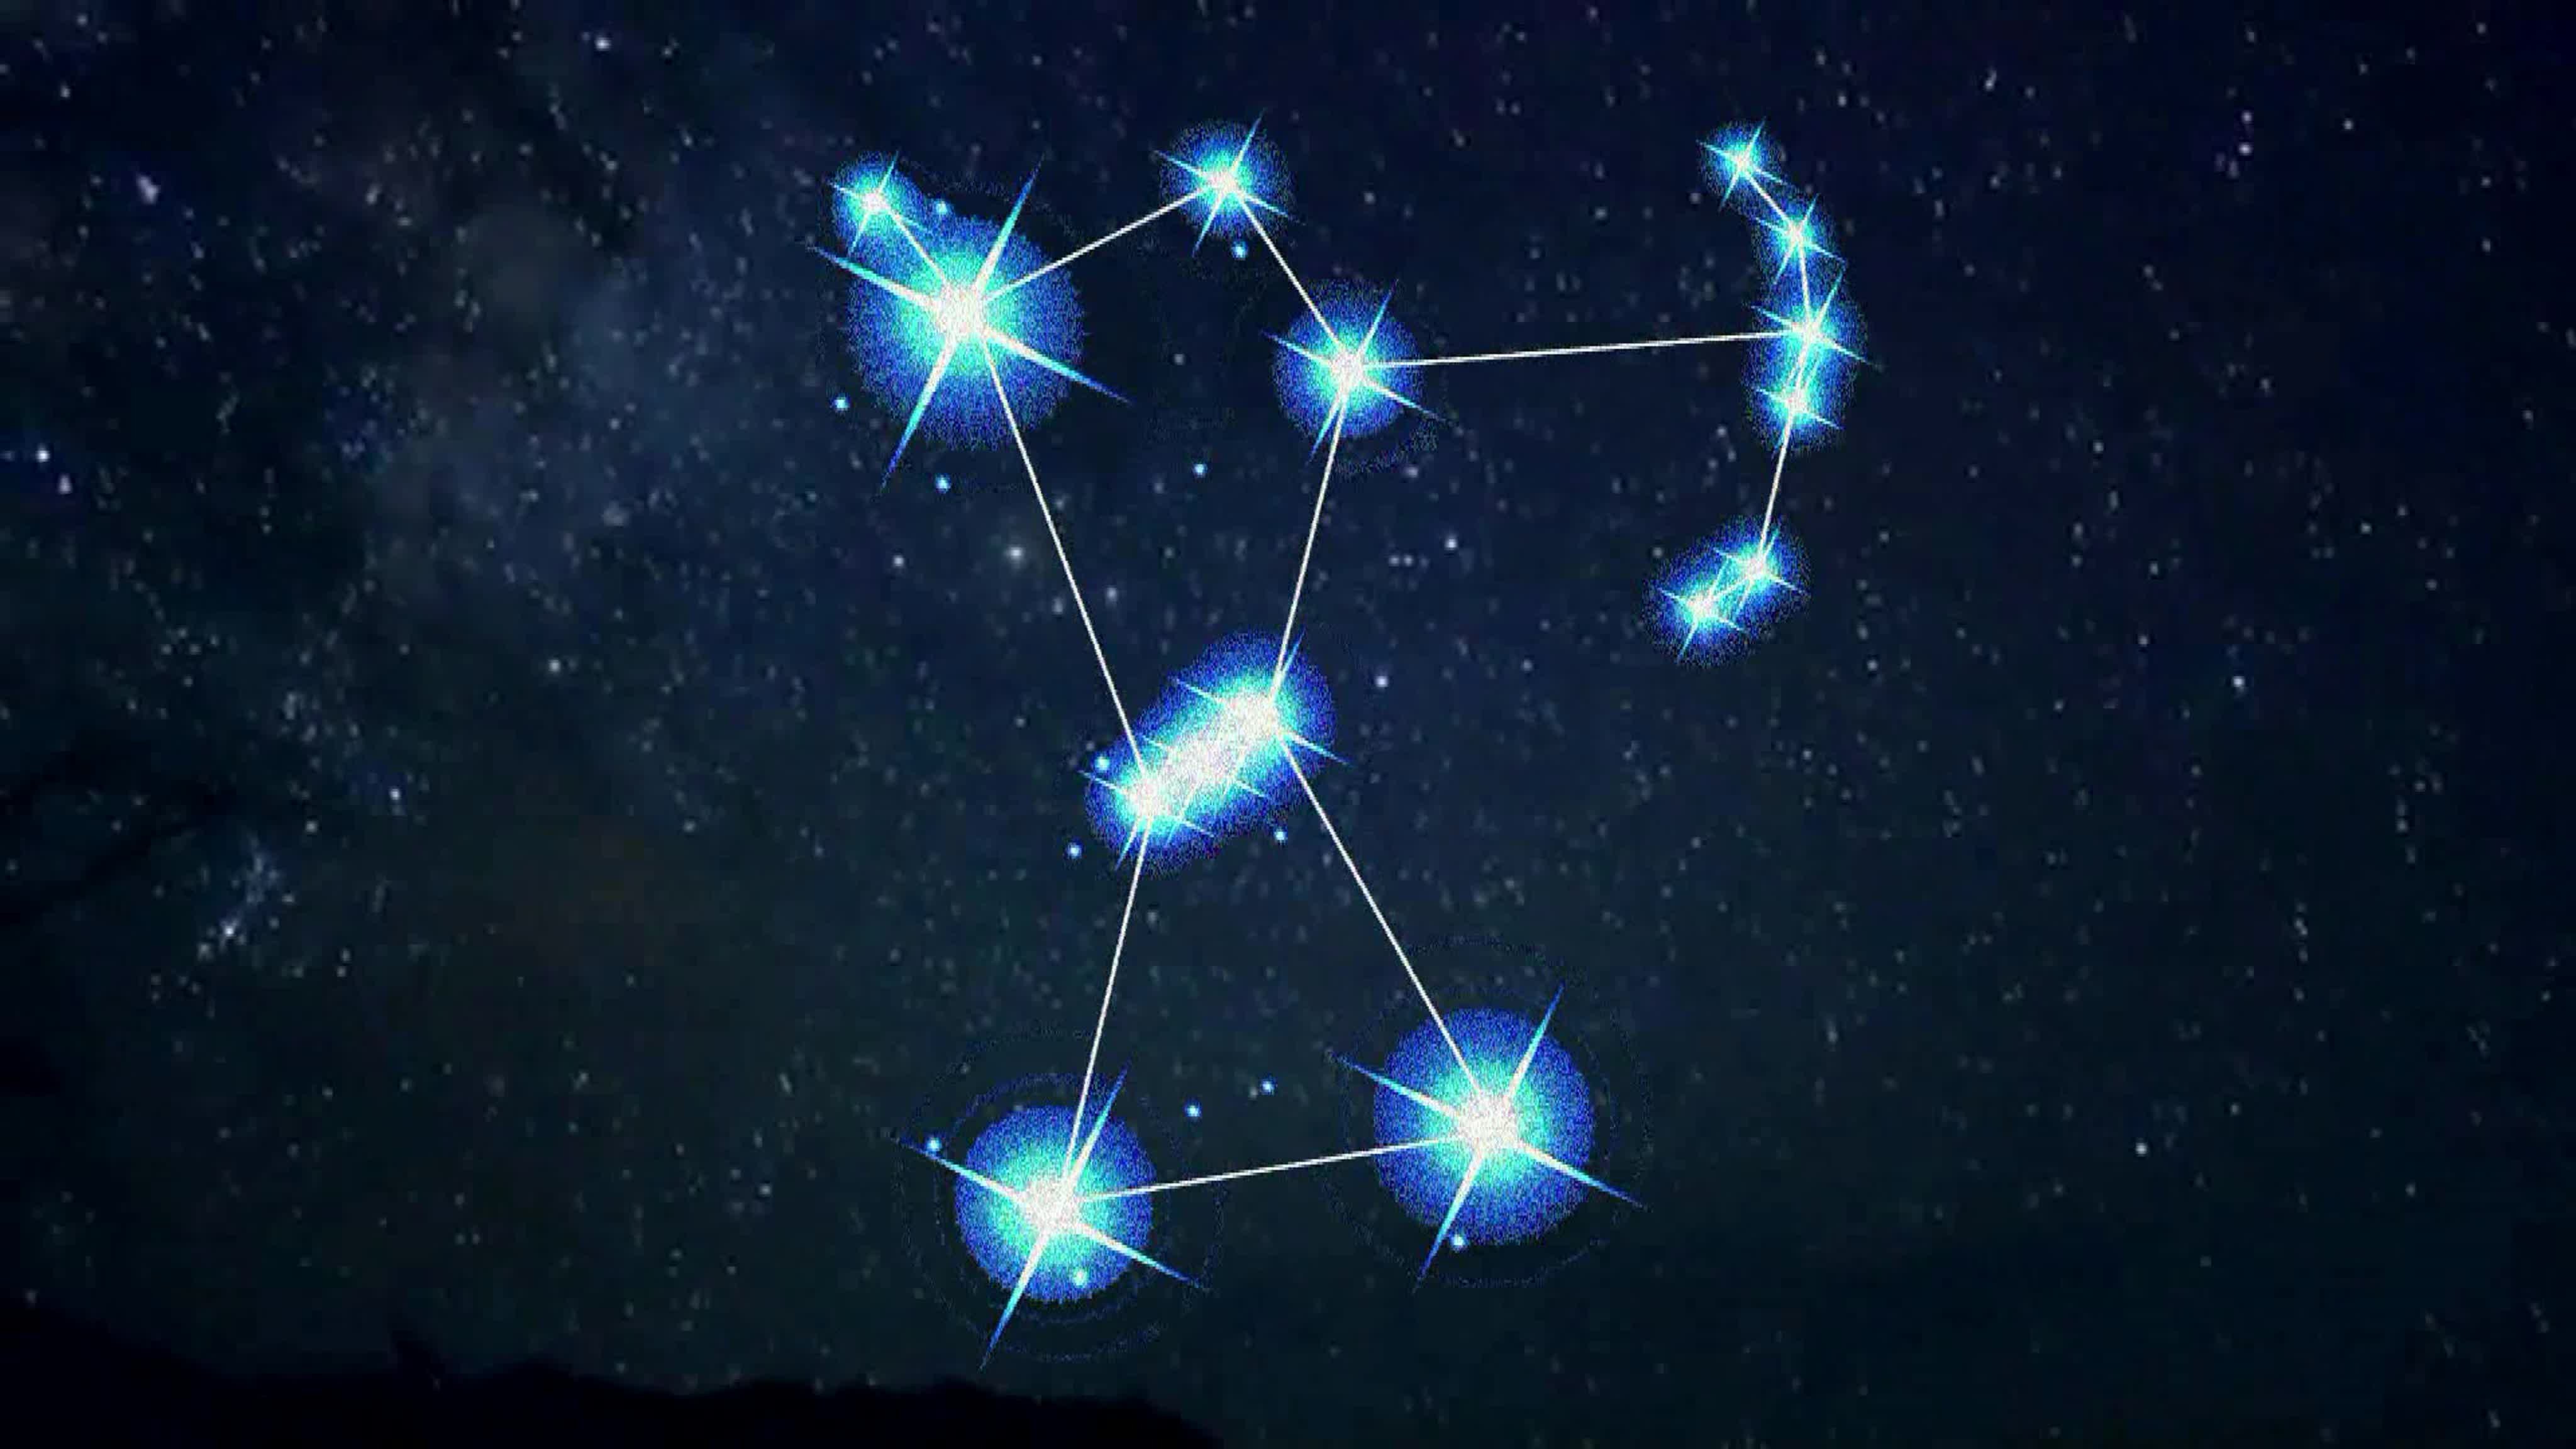 Созвездие минус. Созвездие Орион созвездия. Созвездие Ориона и Плеяды. Созвездие Орион схема. Астеризм сноп Созвездие Ориона.